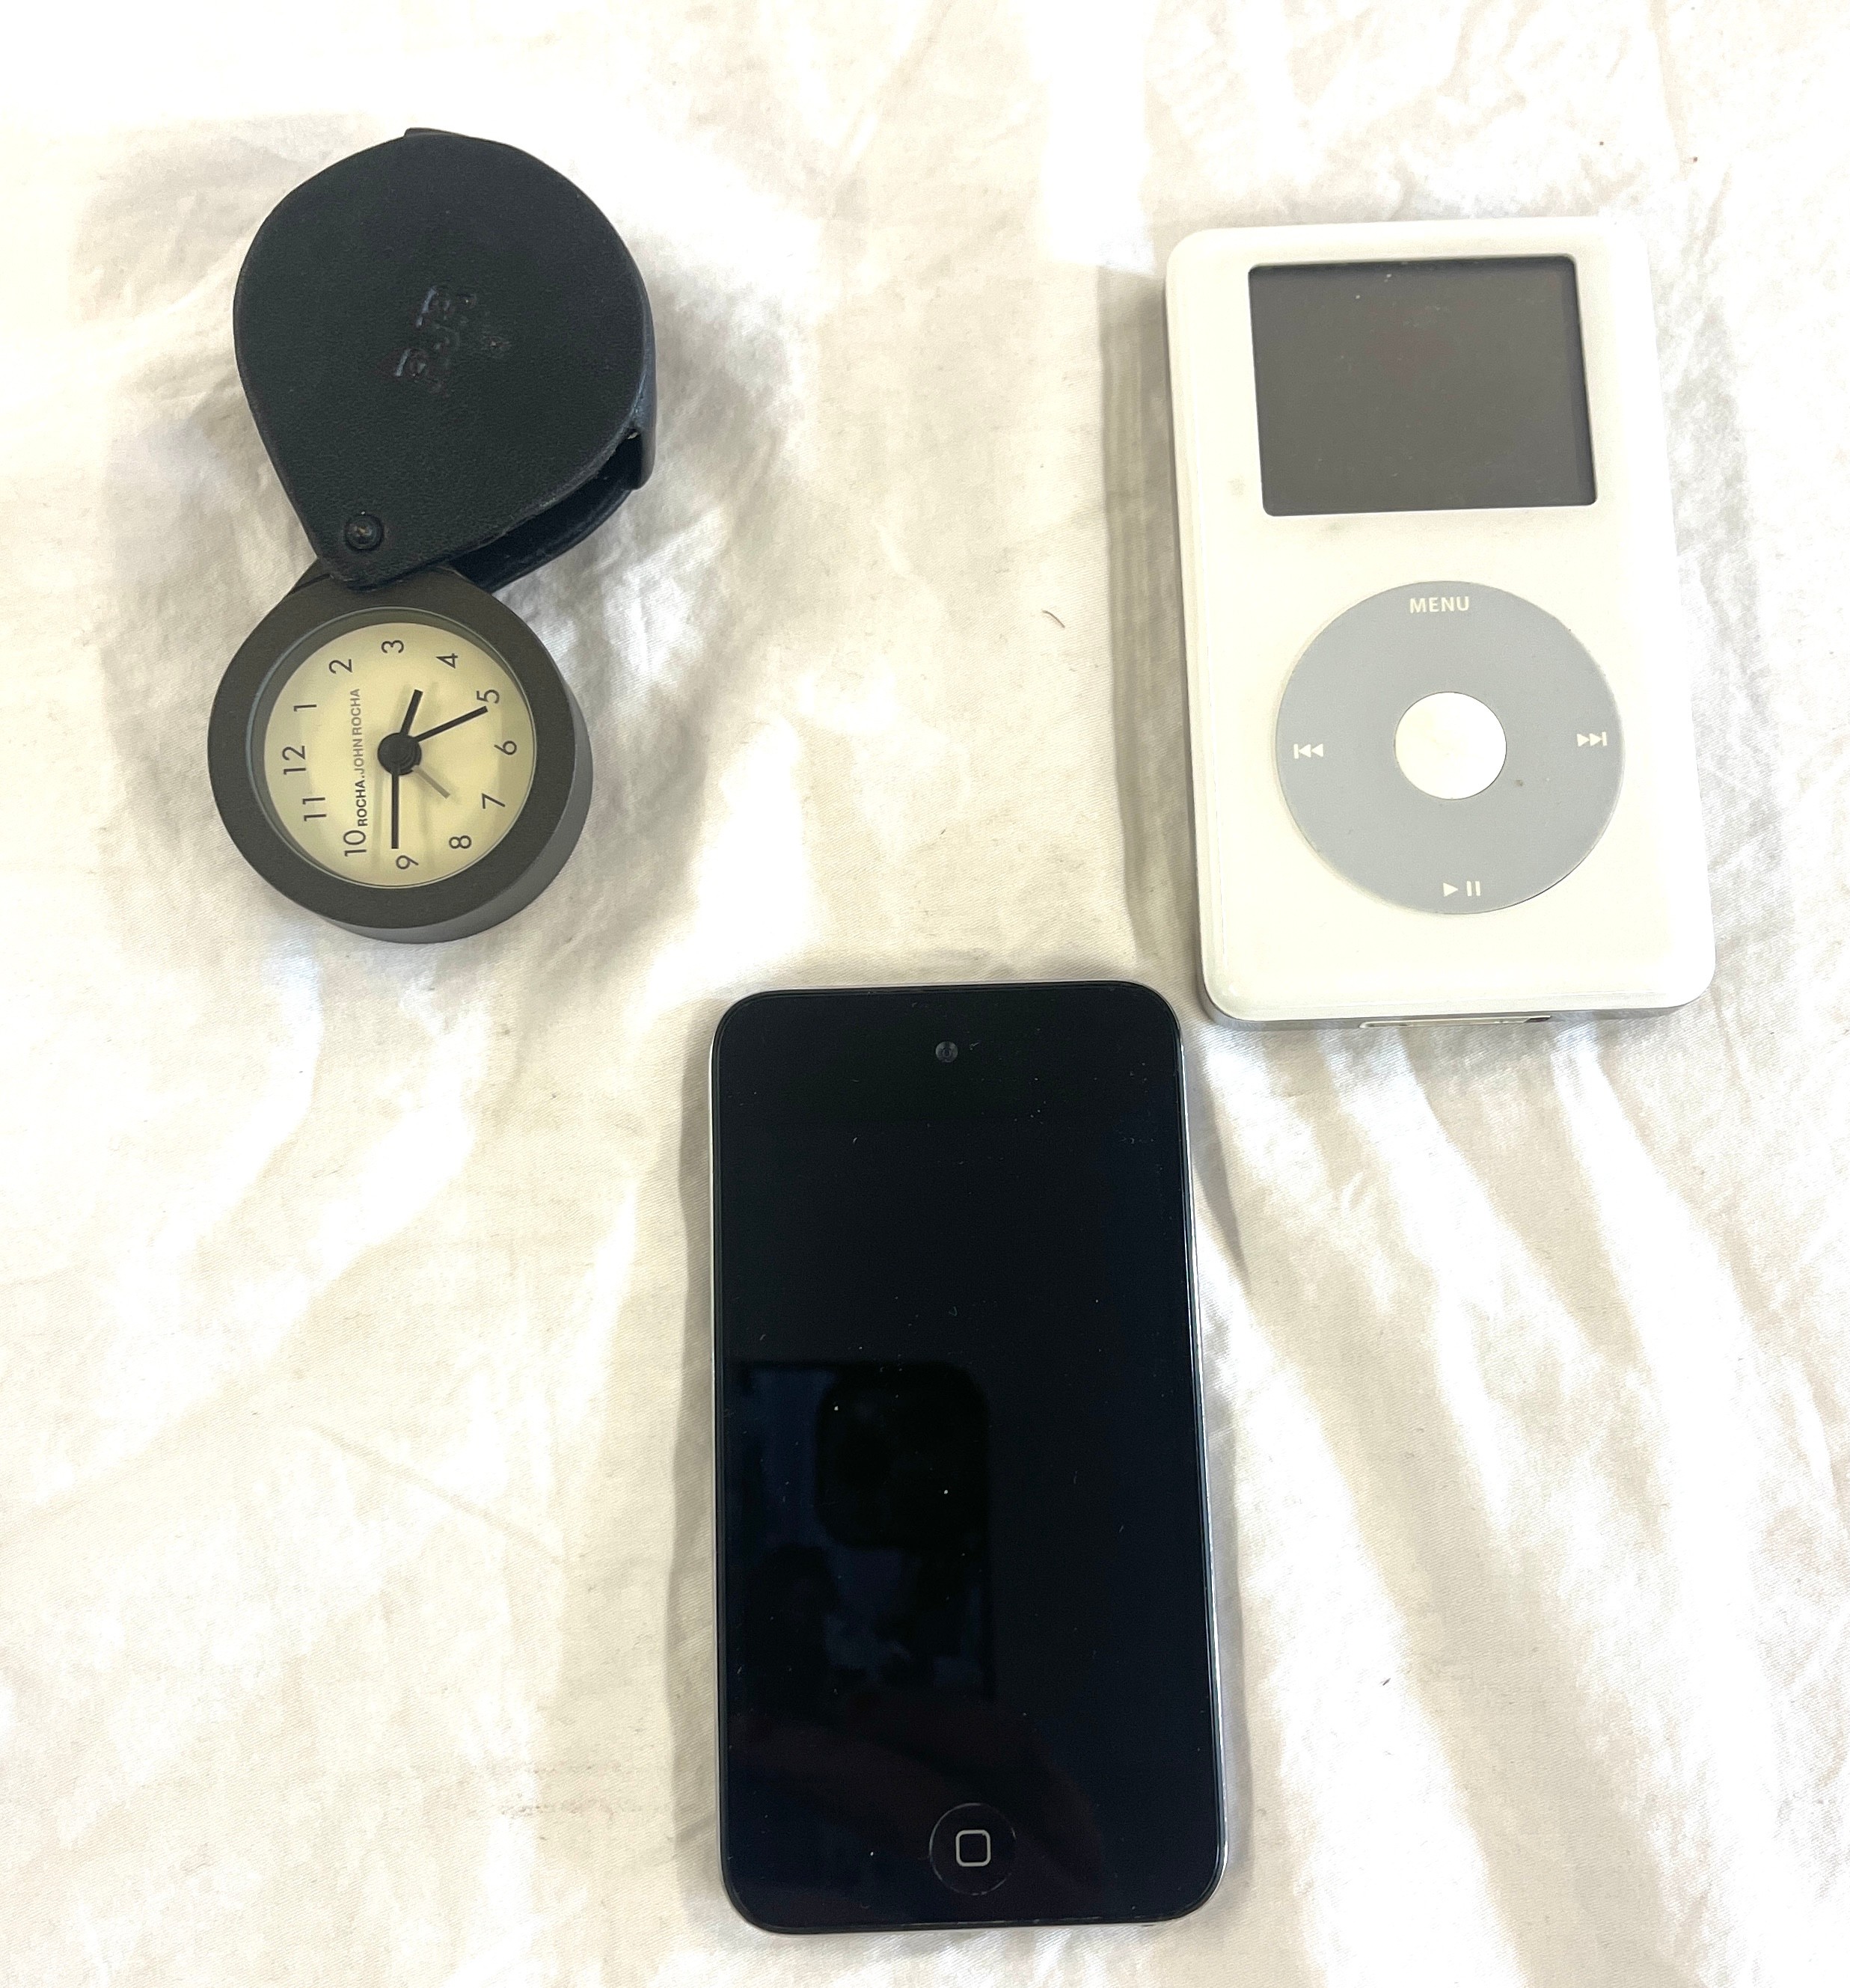 Ipod touch Nano + 1 other ipod and a Rocha.john rocha clock